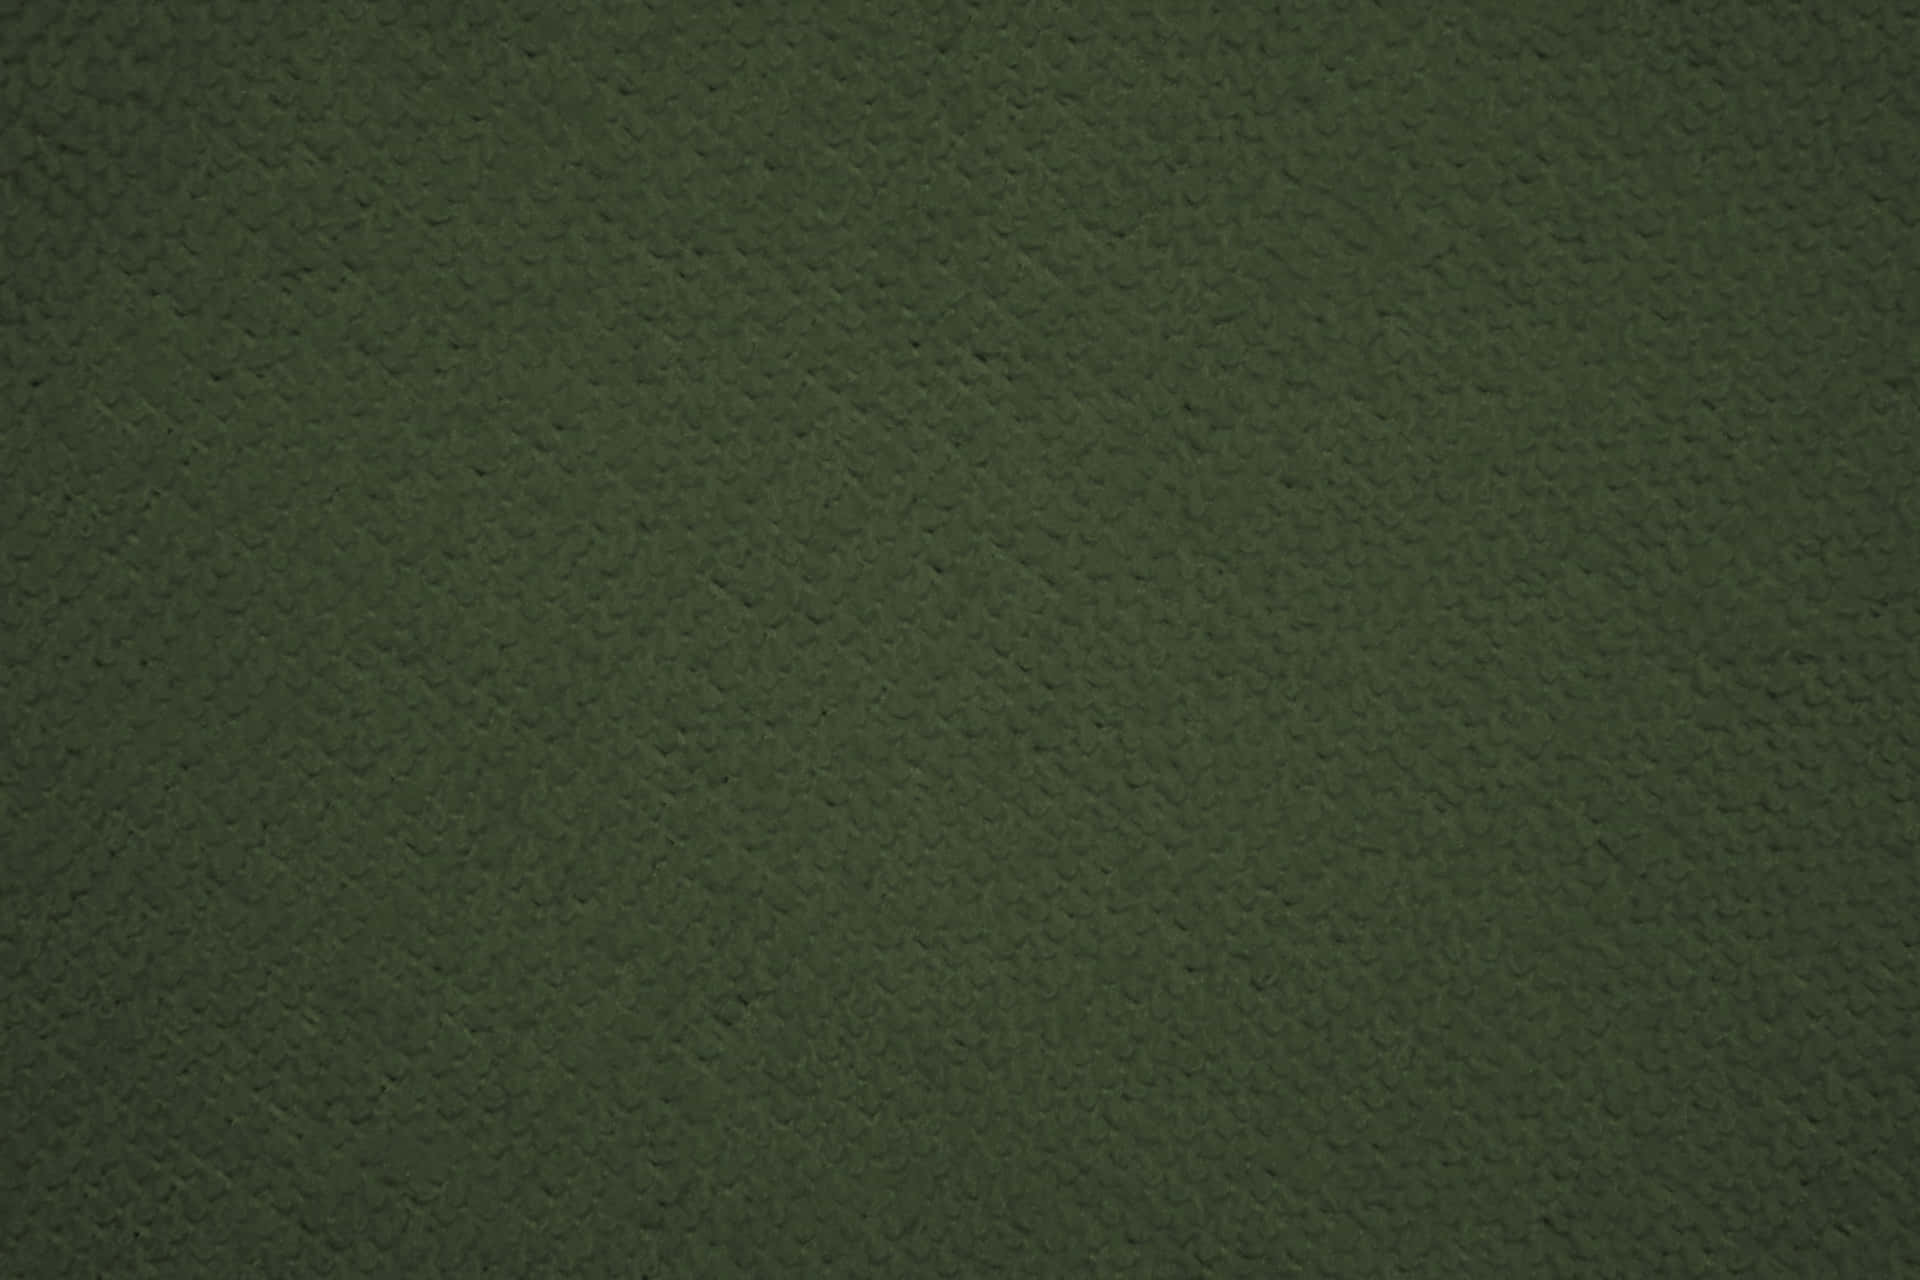 Download Textured Olive Greenaesthetic Desktop Wallpaper | Wallpapers.com